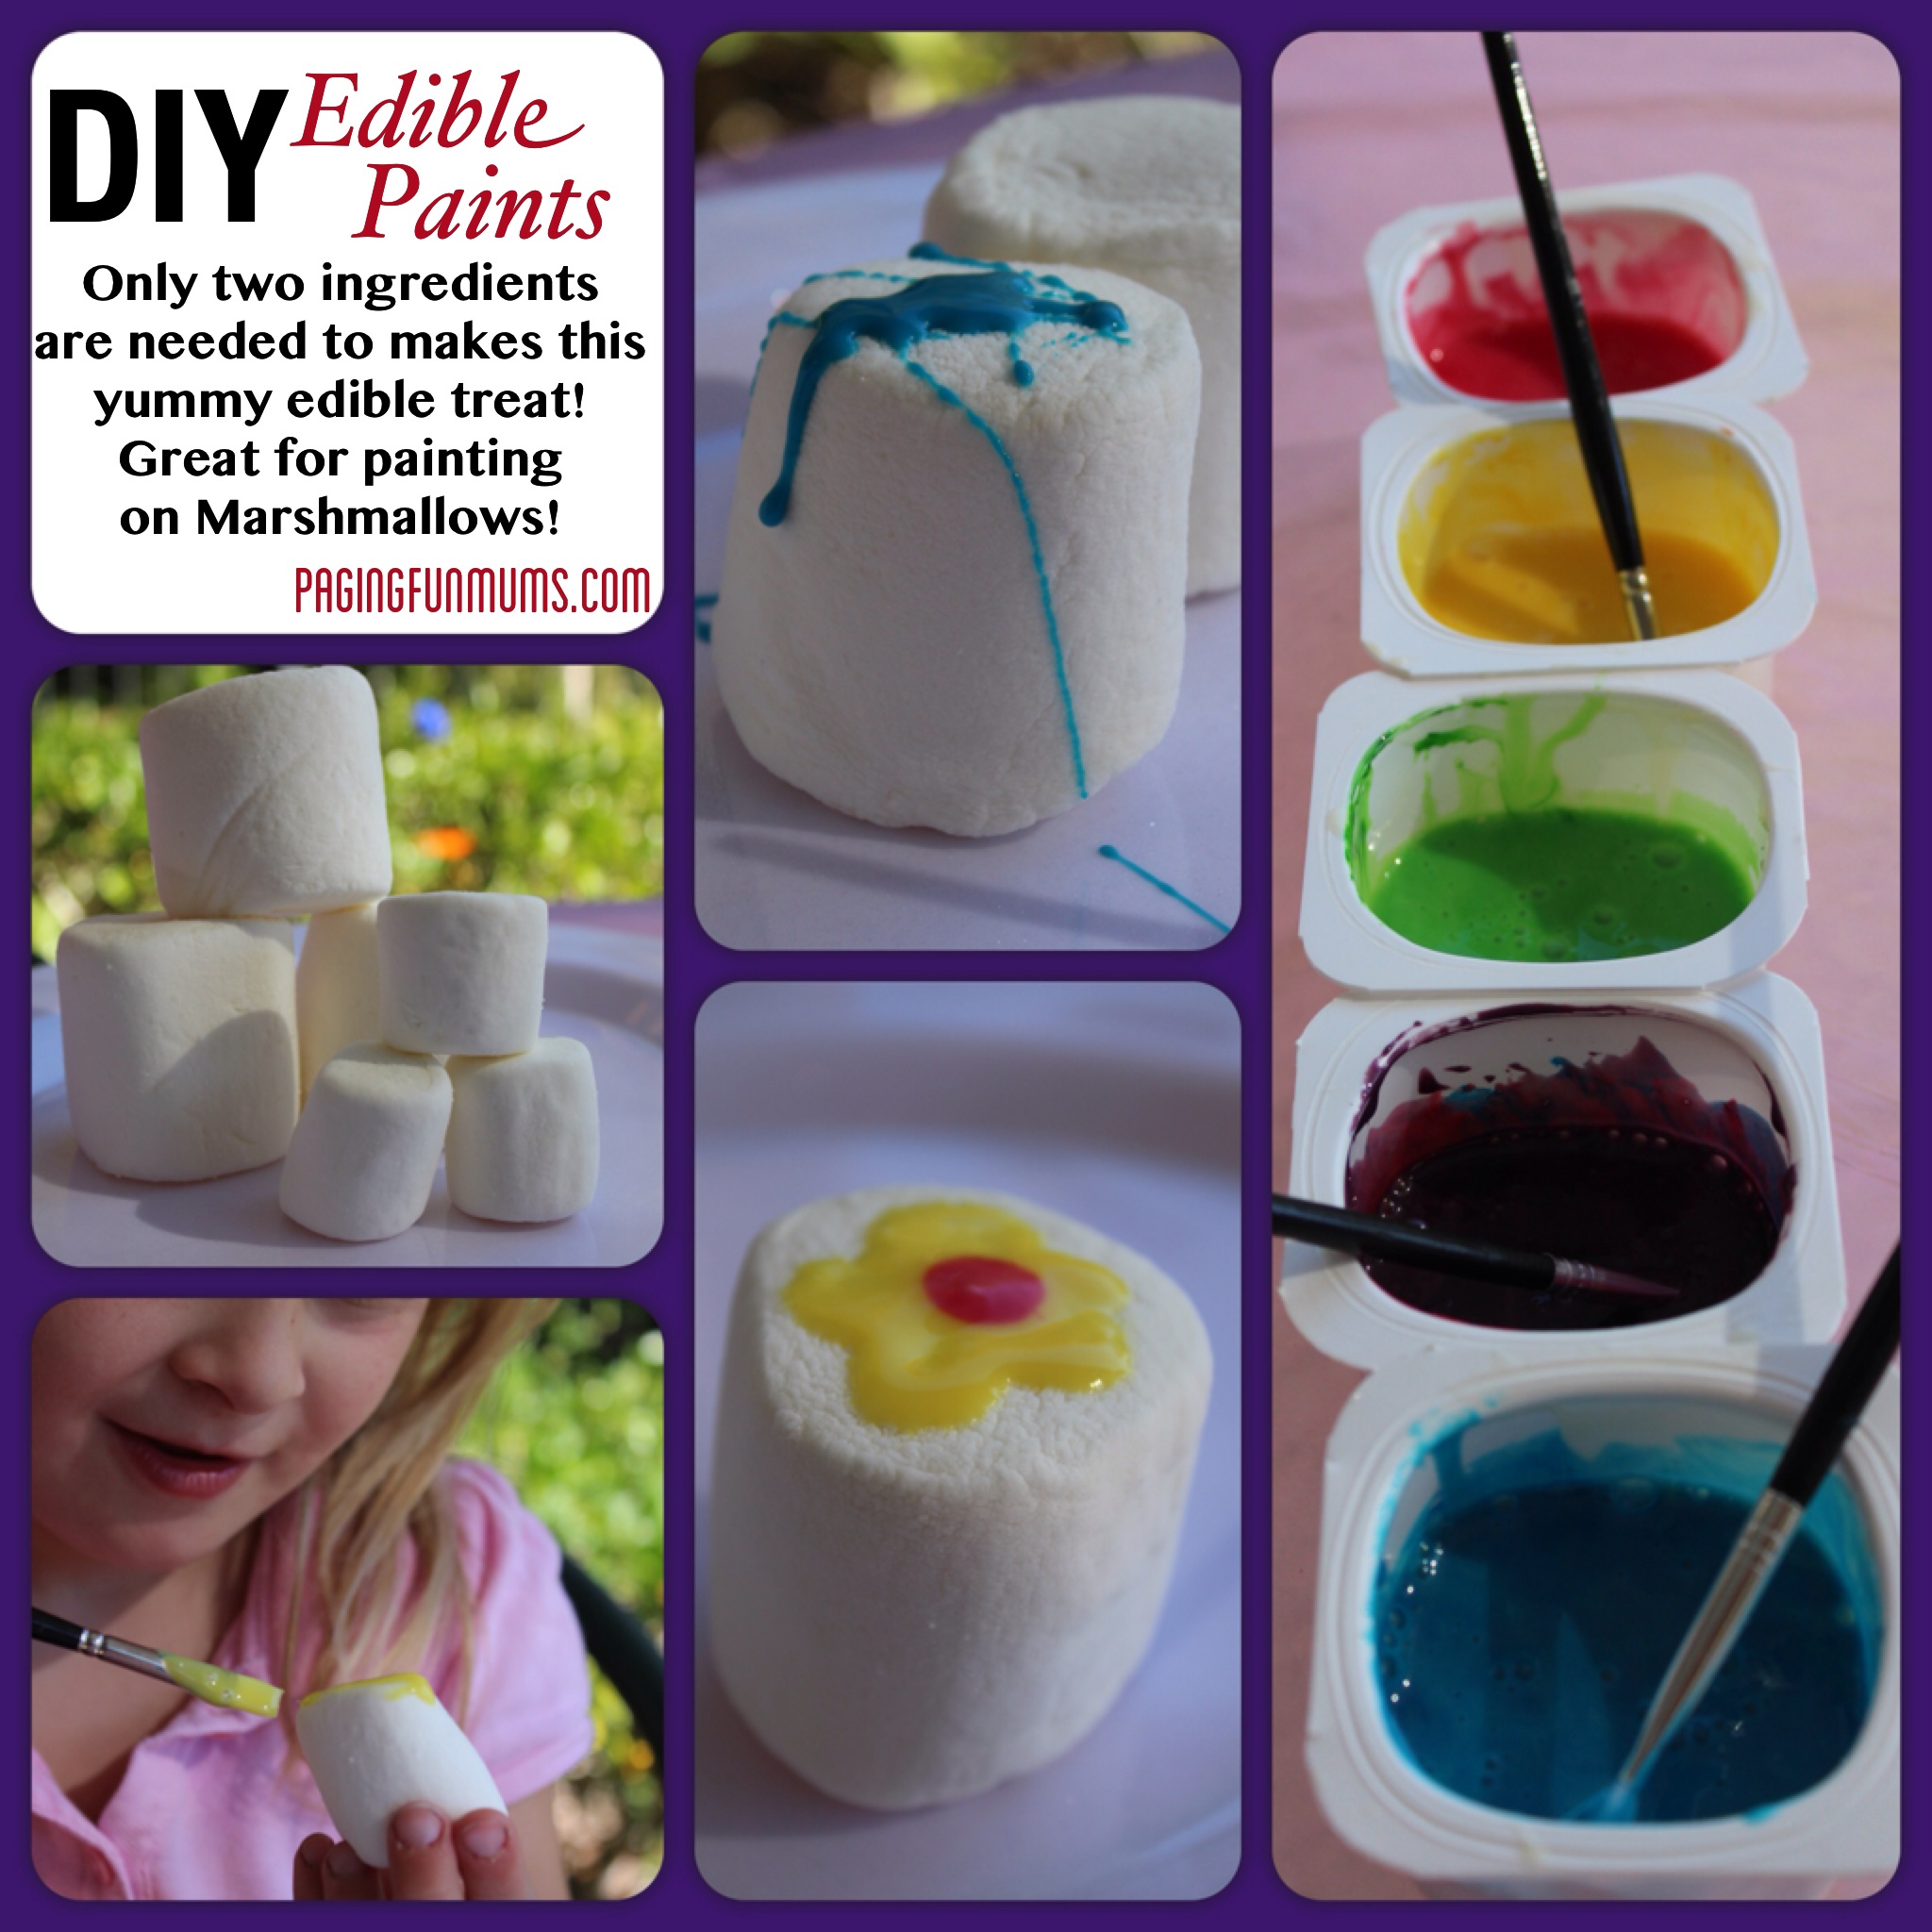 DIY Edible Paints - Yummy